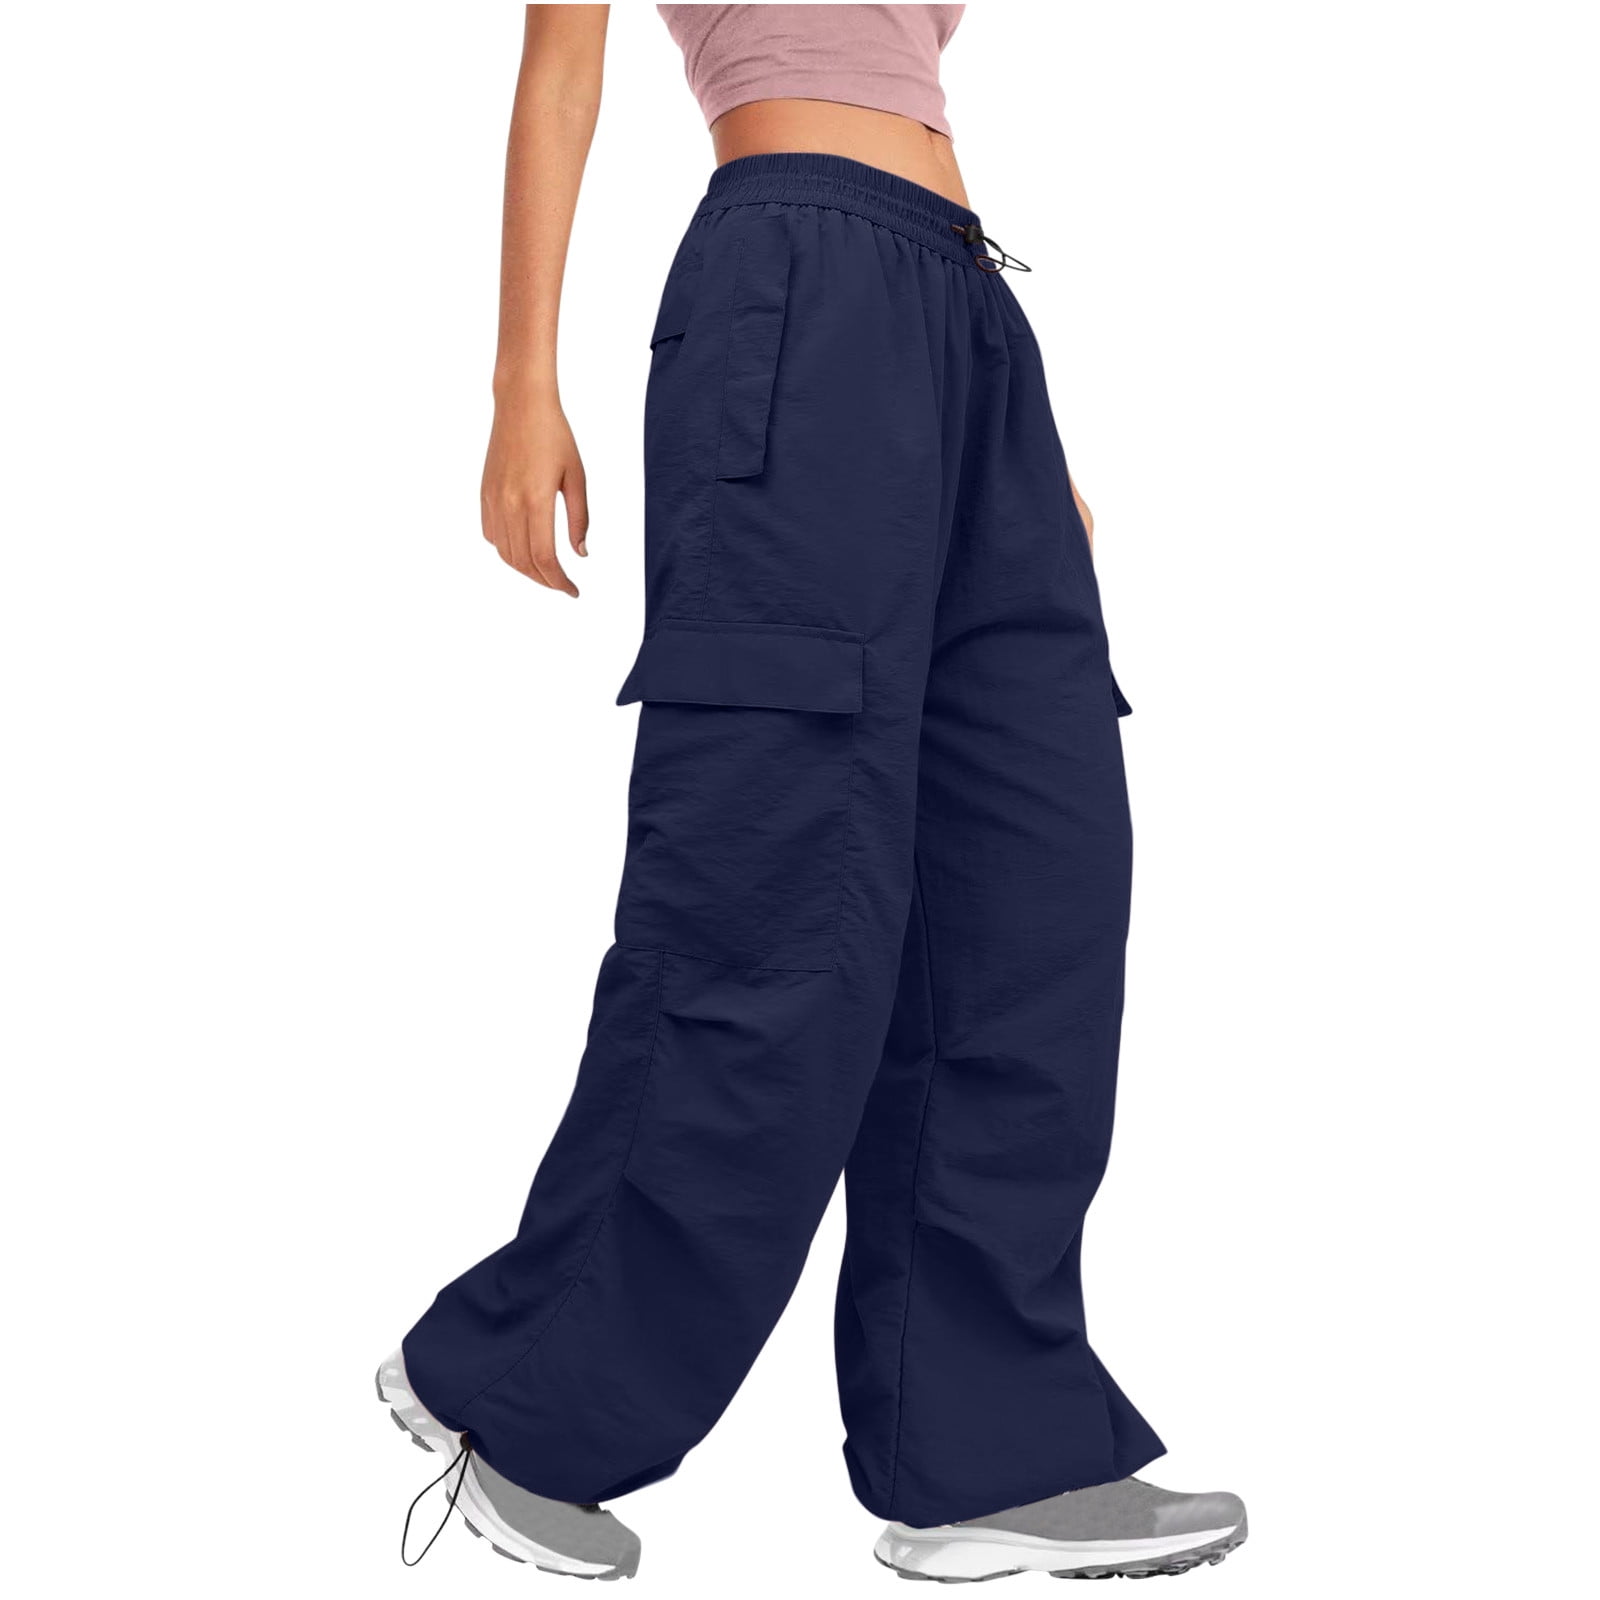 RYRJJ Parachute Pants for Women Baggy Cargo Pants Multi-Pocket